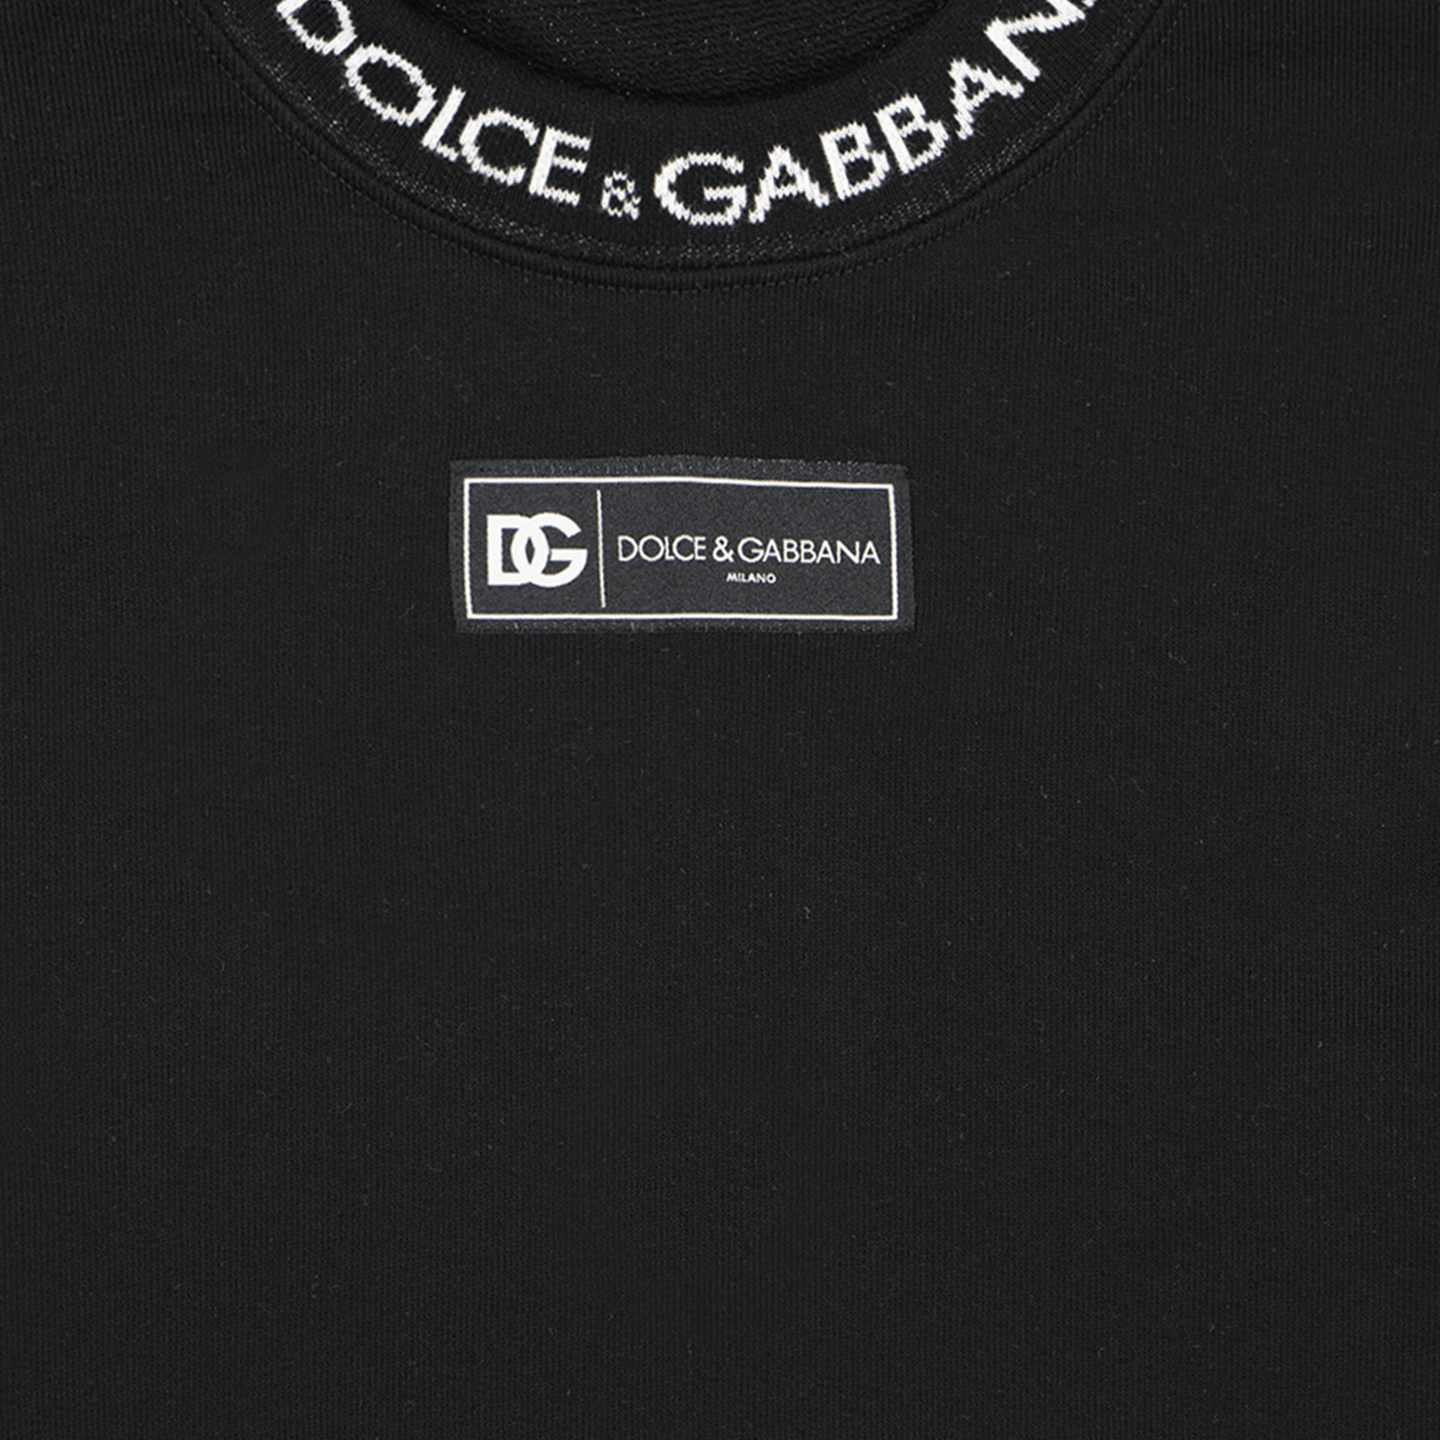 Dolce & Gabbana Kinder Trui Zwart 2Y